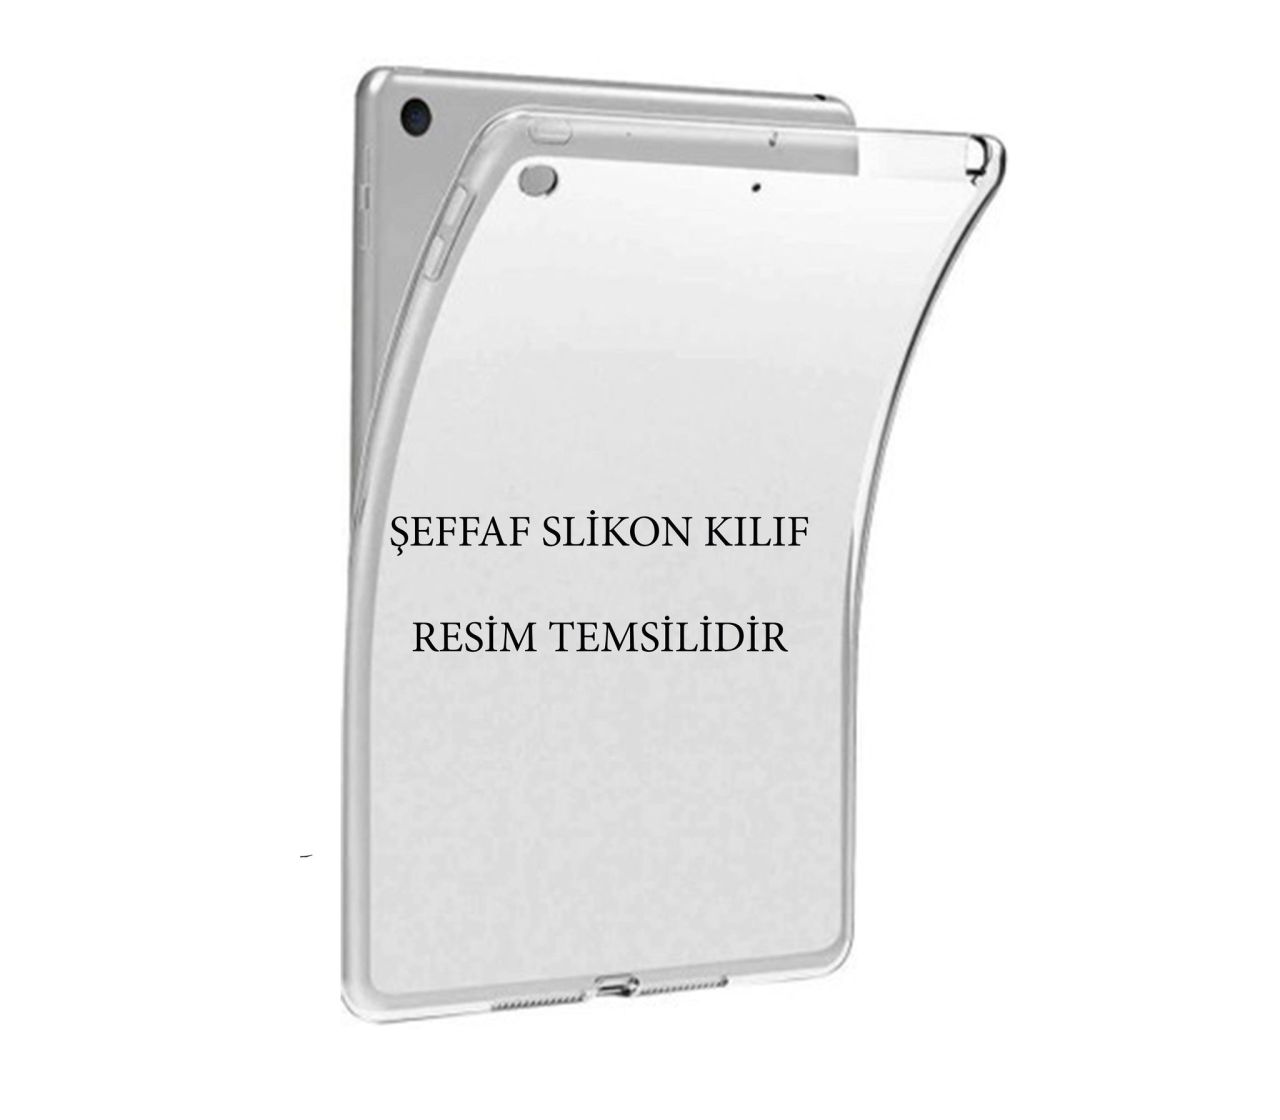 Samsung Galaxy Tab A 10.5 SM-T590 Şeffaf Slikon Kılıf